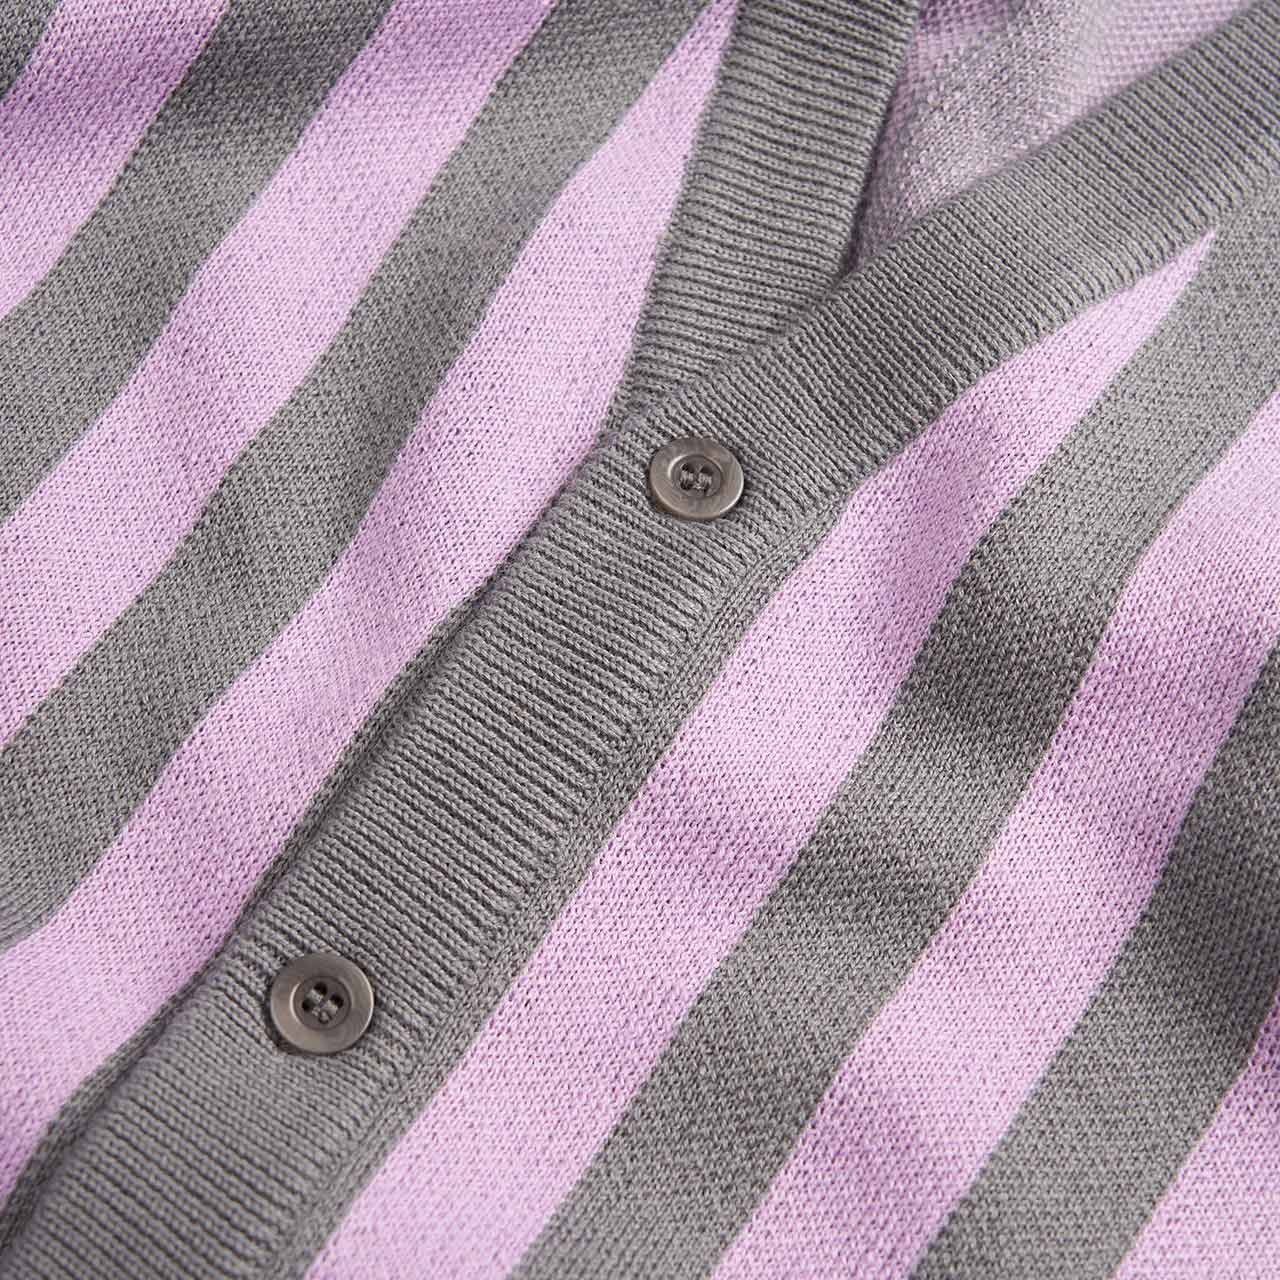 rassvet rassvet knit cardigan (purple / grey)